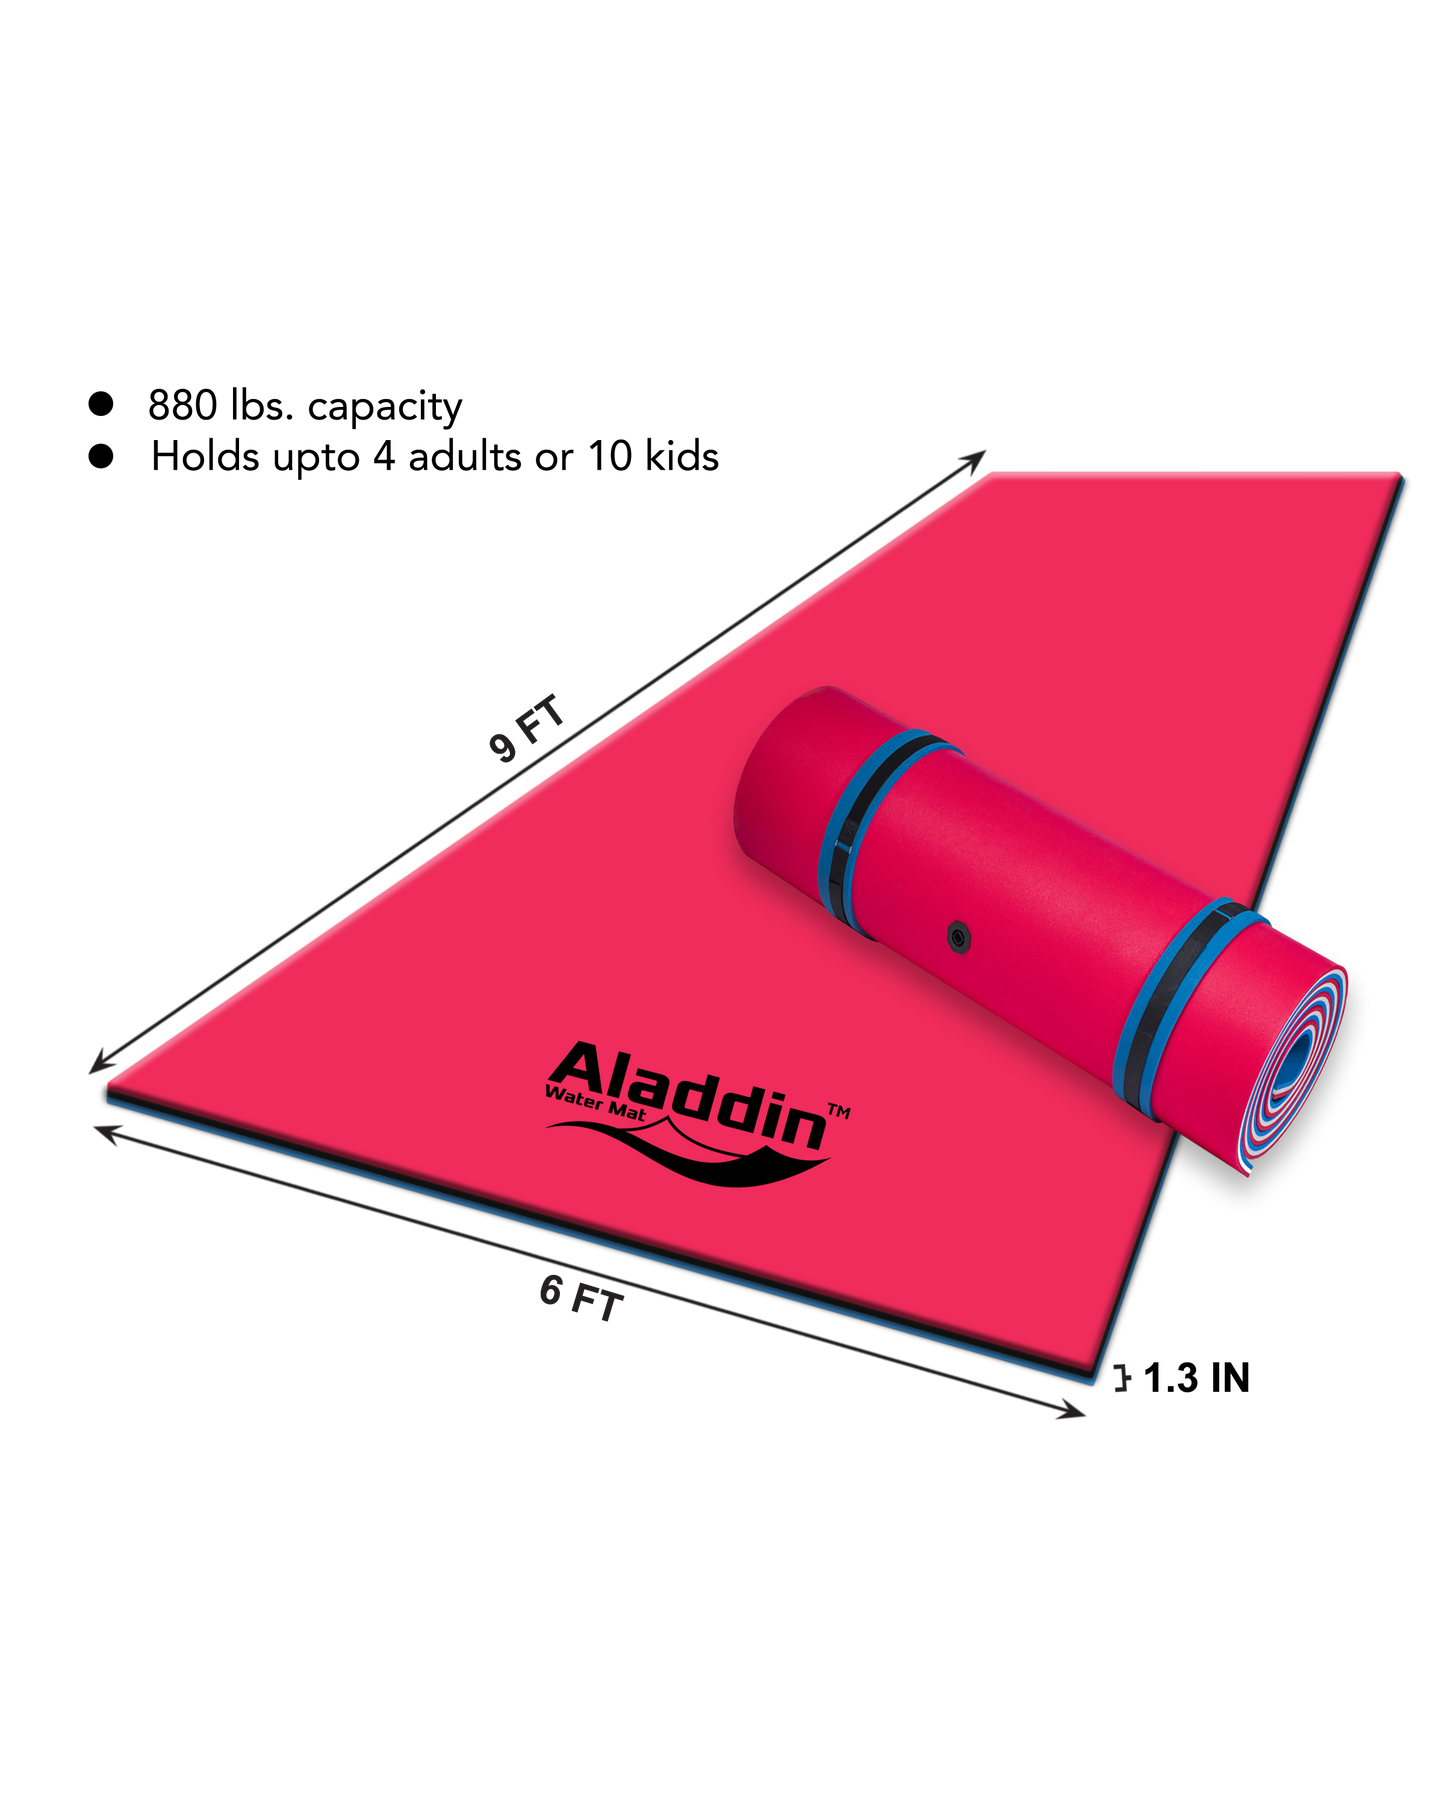 Aladdin Water Mat™ (9x6) Floating Water Mat, Premium Foam (Red/Blue)